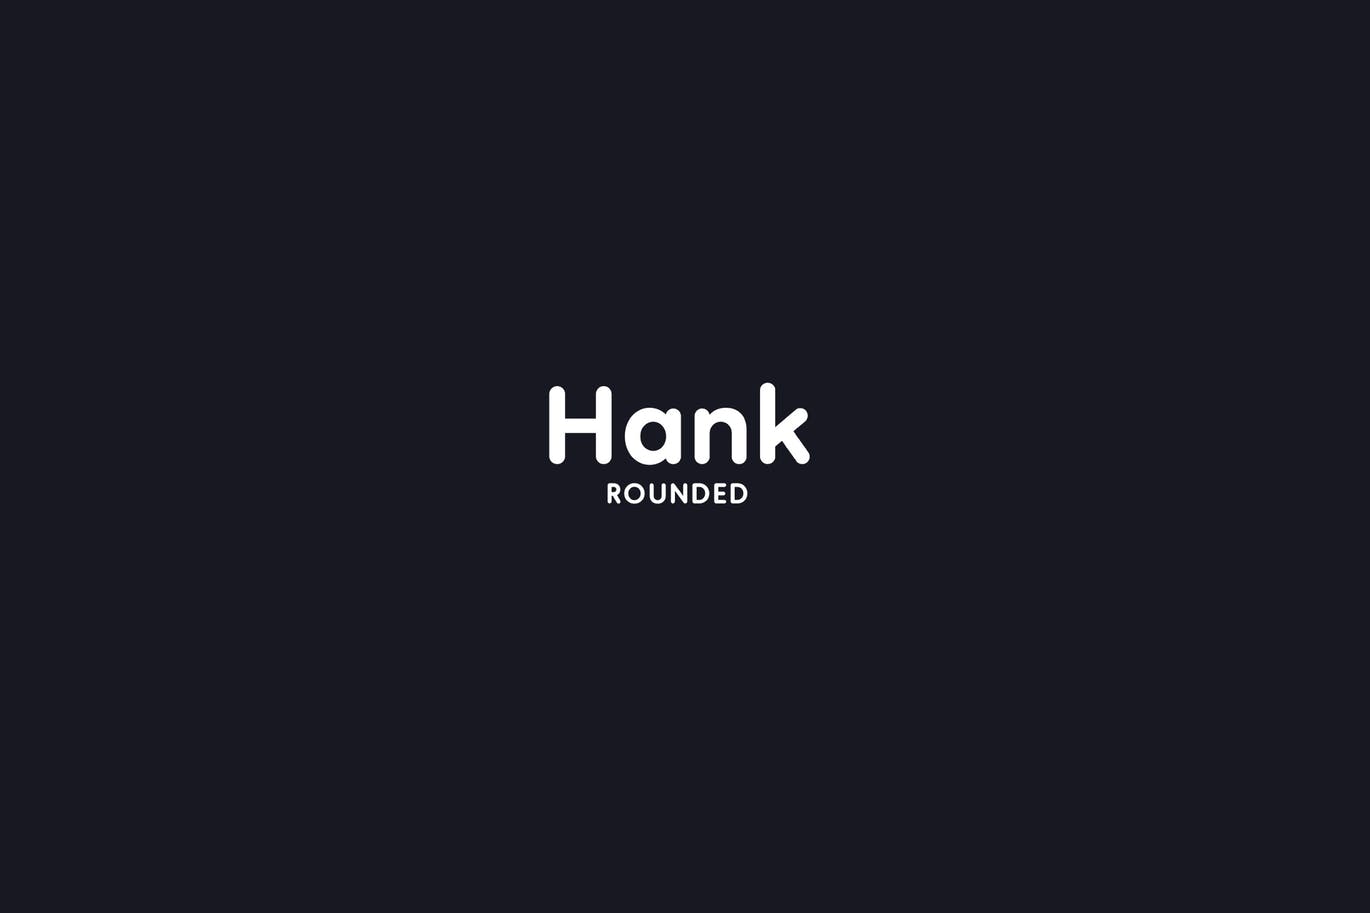 Hank rounded logo type